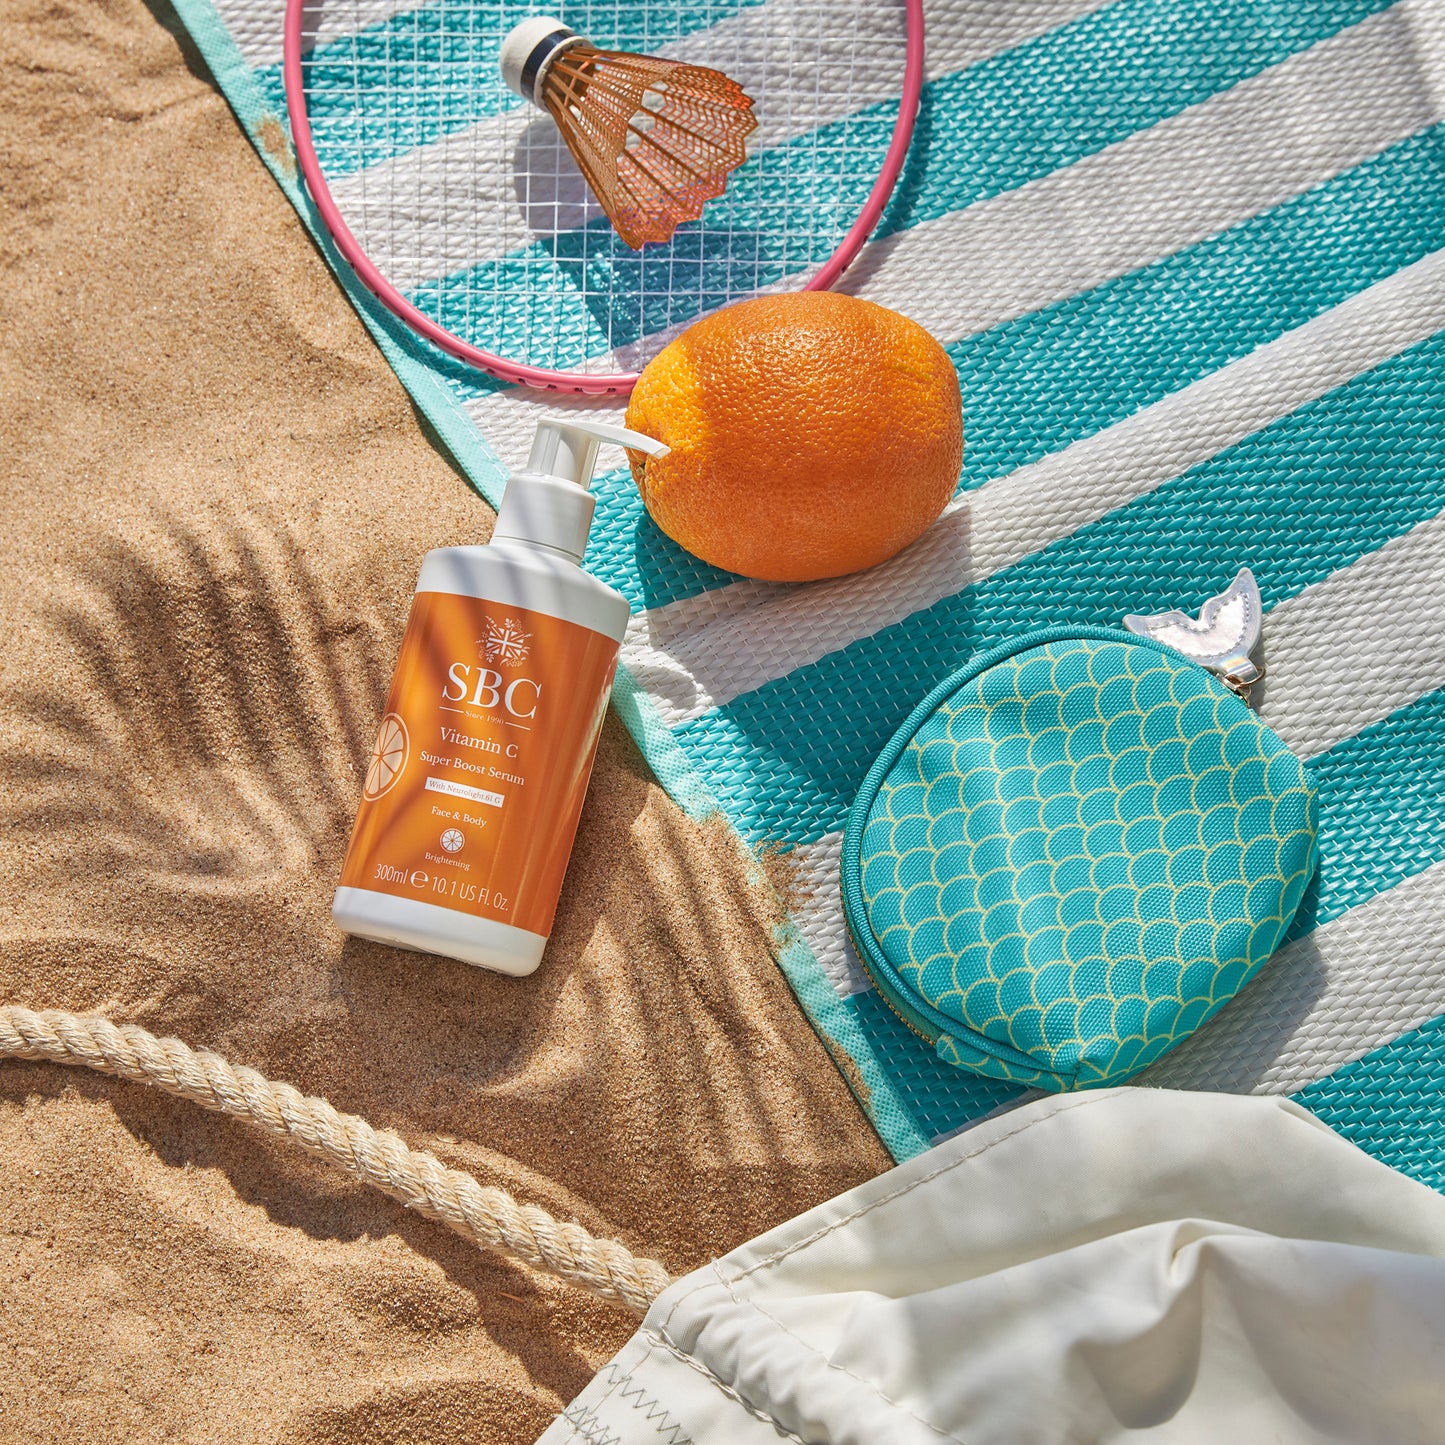 Vitamin C Super Boost Serum on a beach towel in the sand